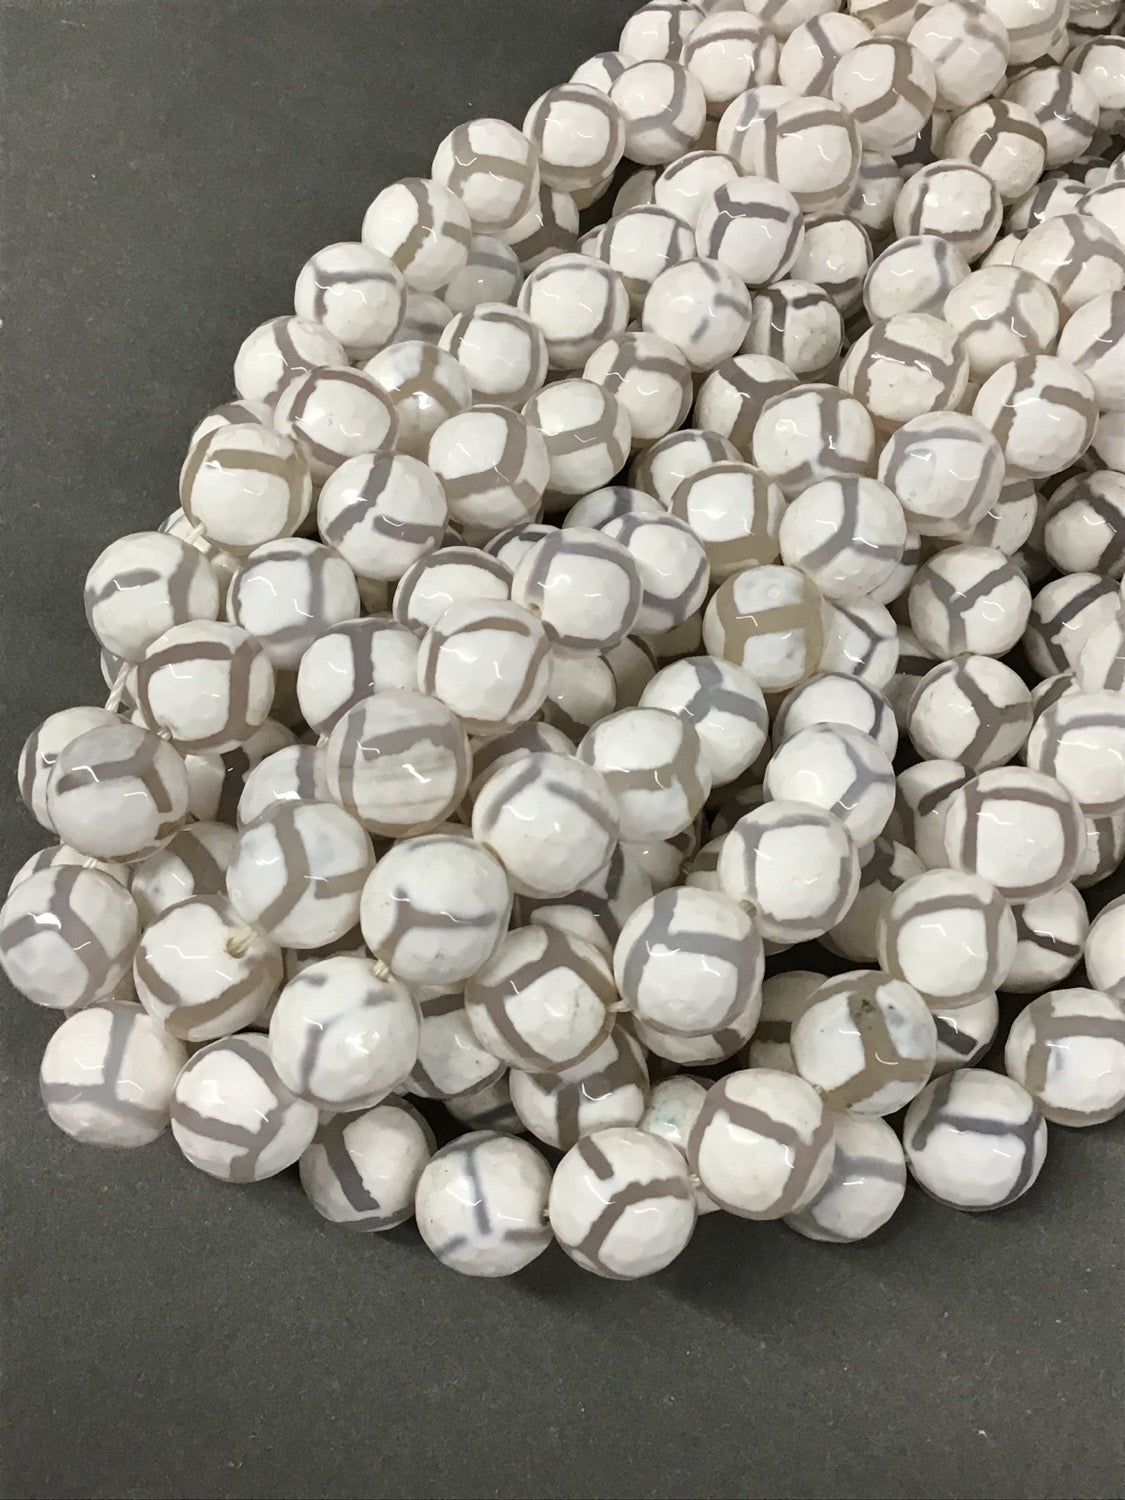 10mm White Tibetan Agate / Agata 13770